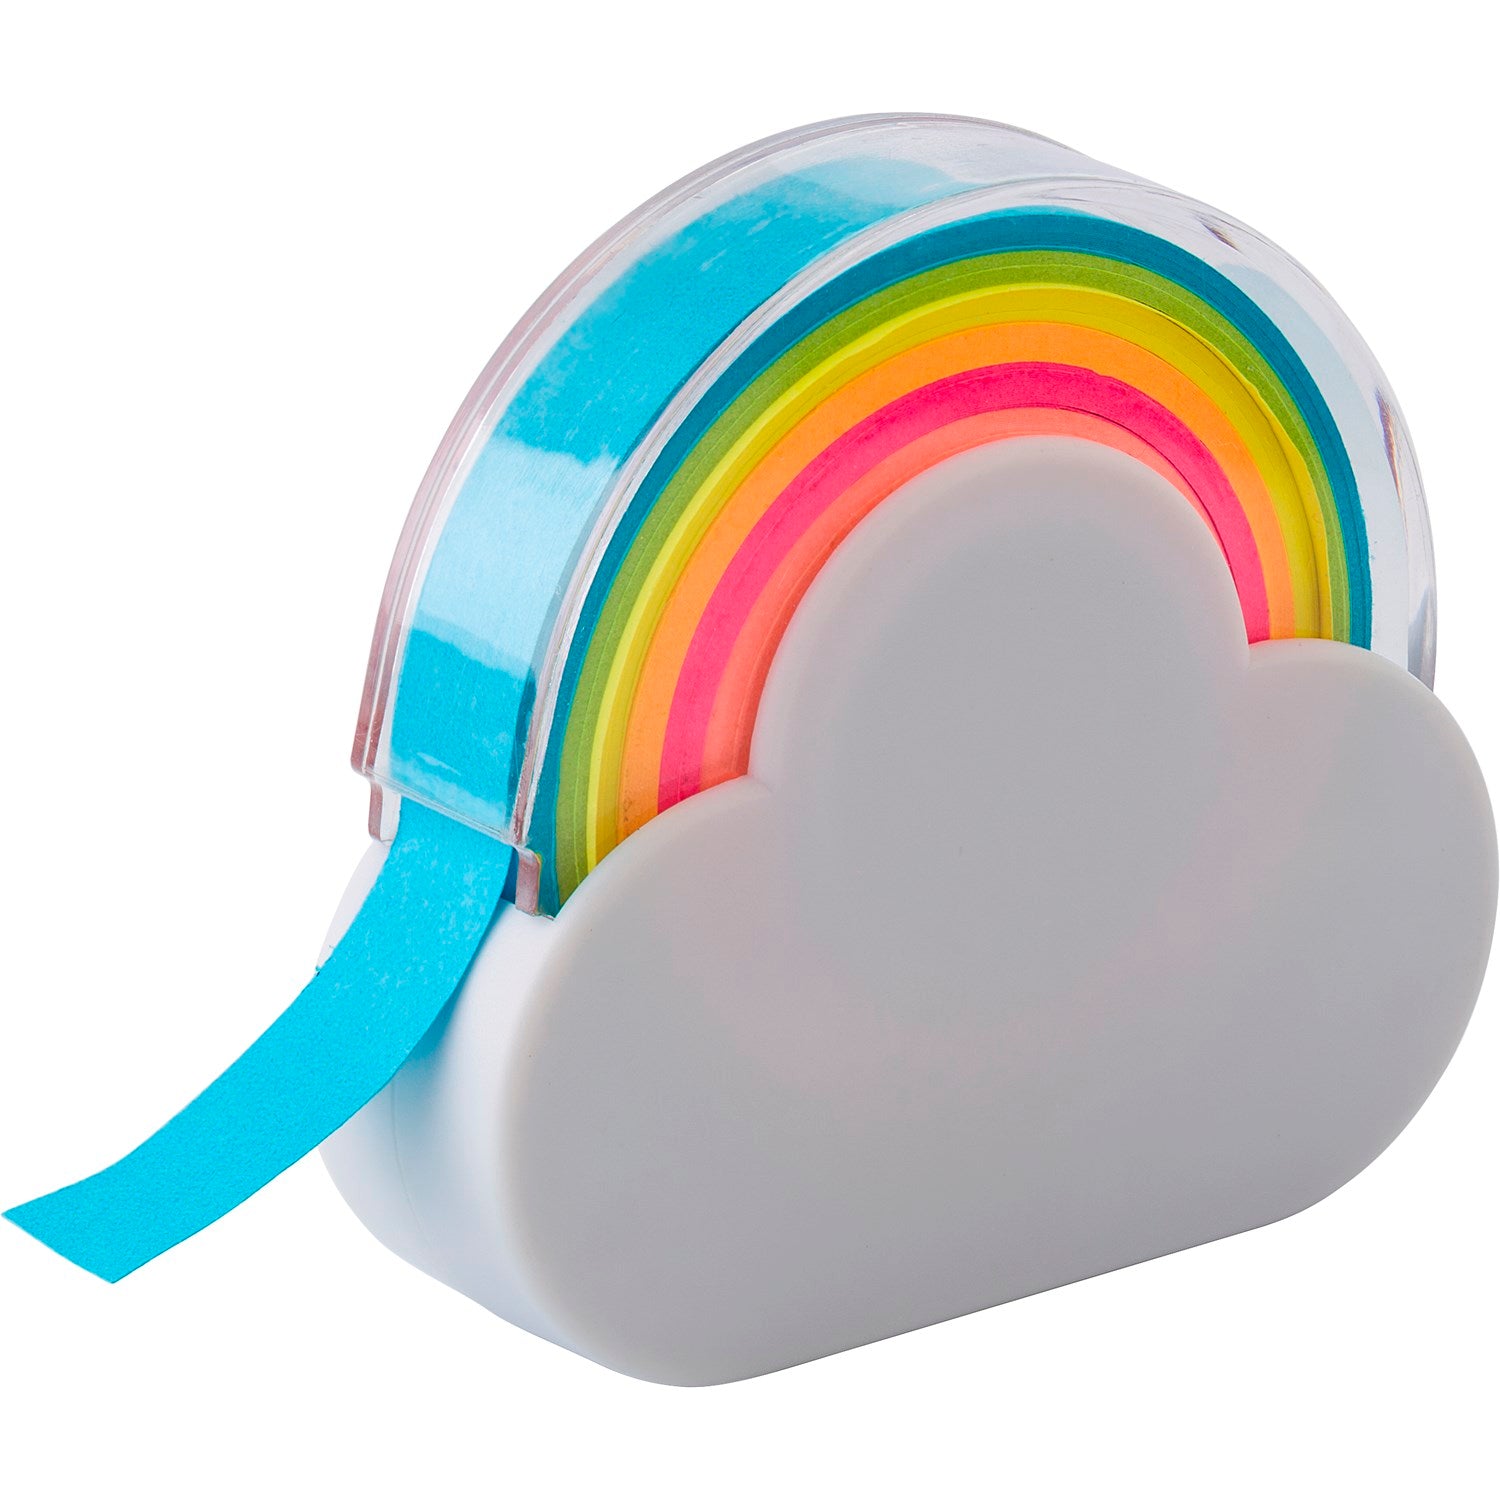 Cloud Shaped Rainbow Branded Memo Dispenser